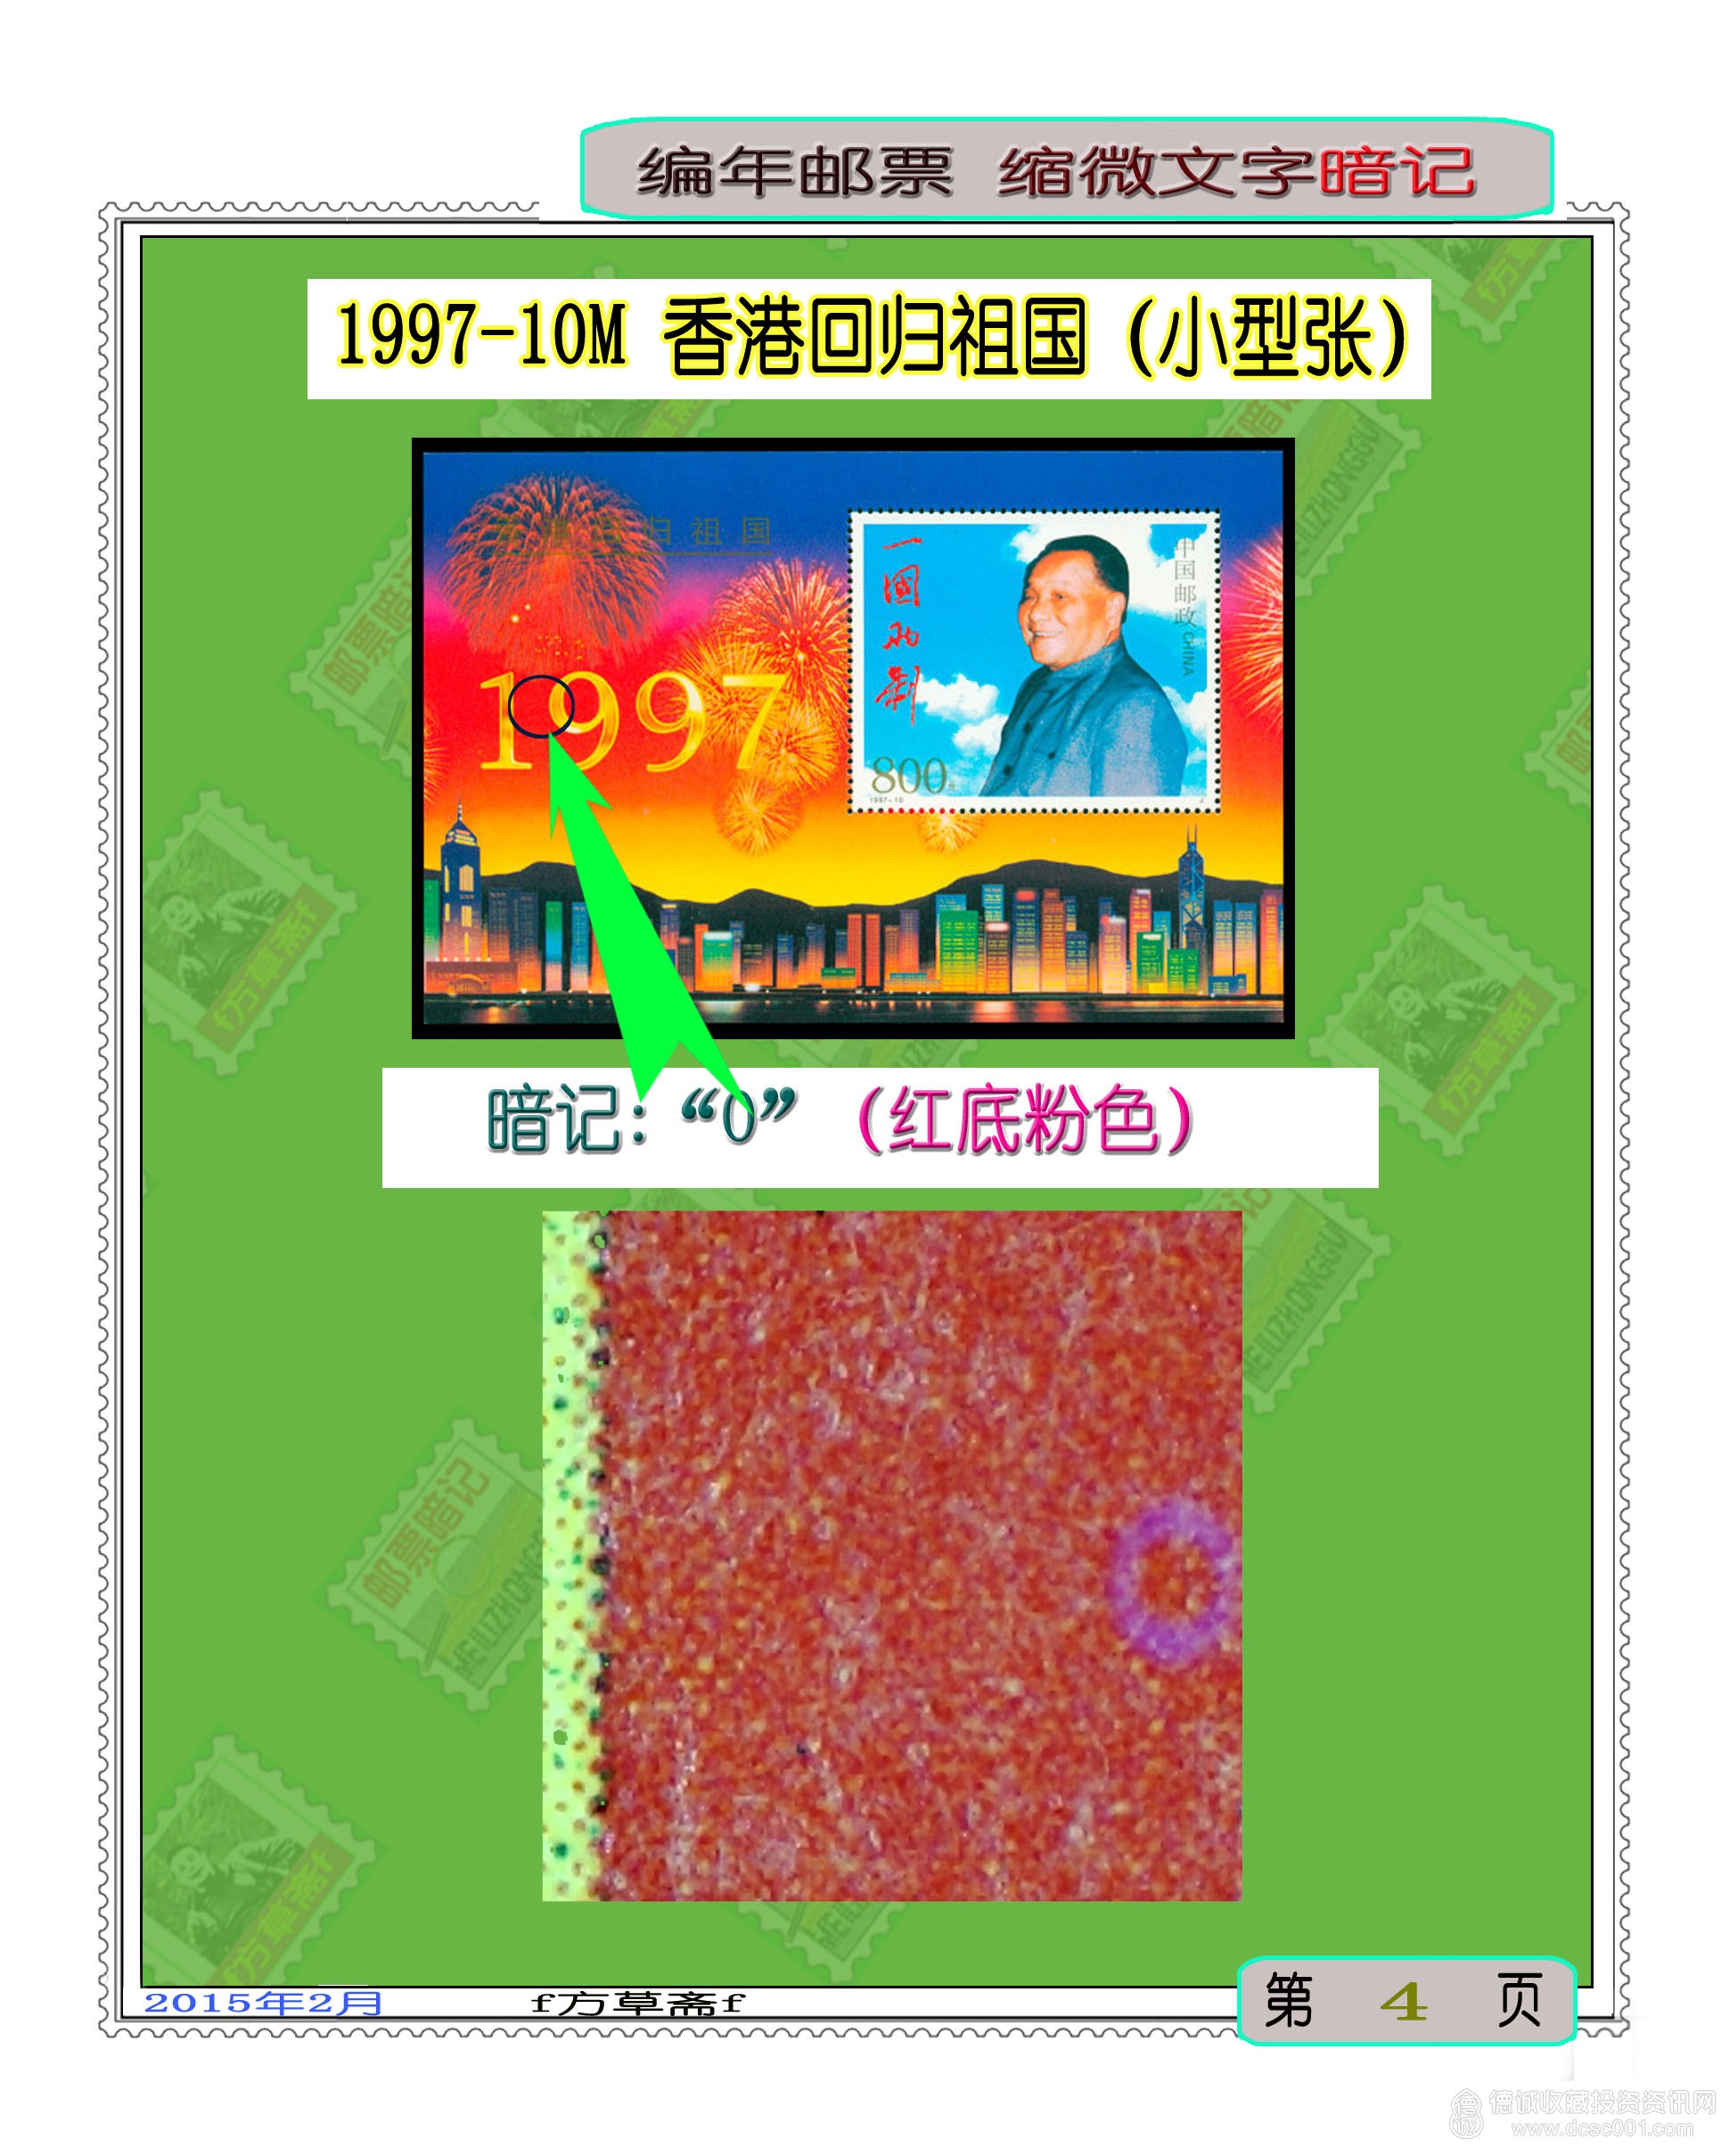 1997-10M 香港回归祖国（小型张）(J).jpg